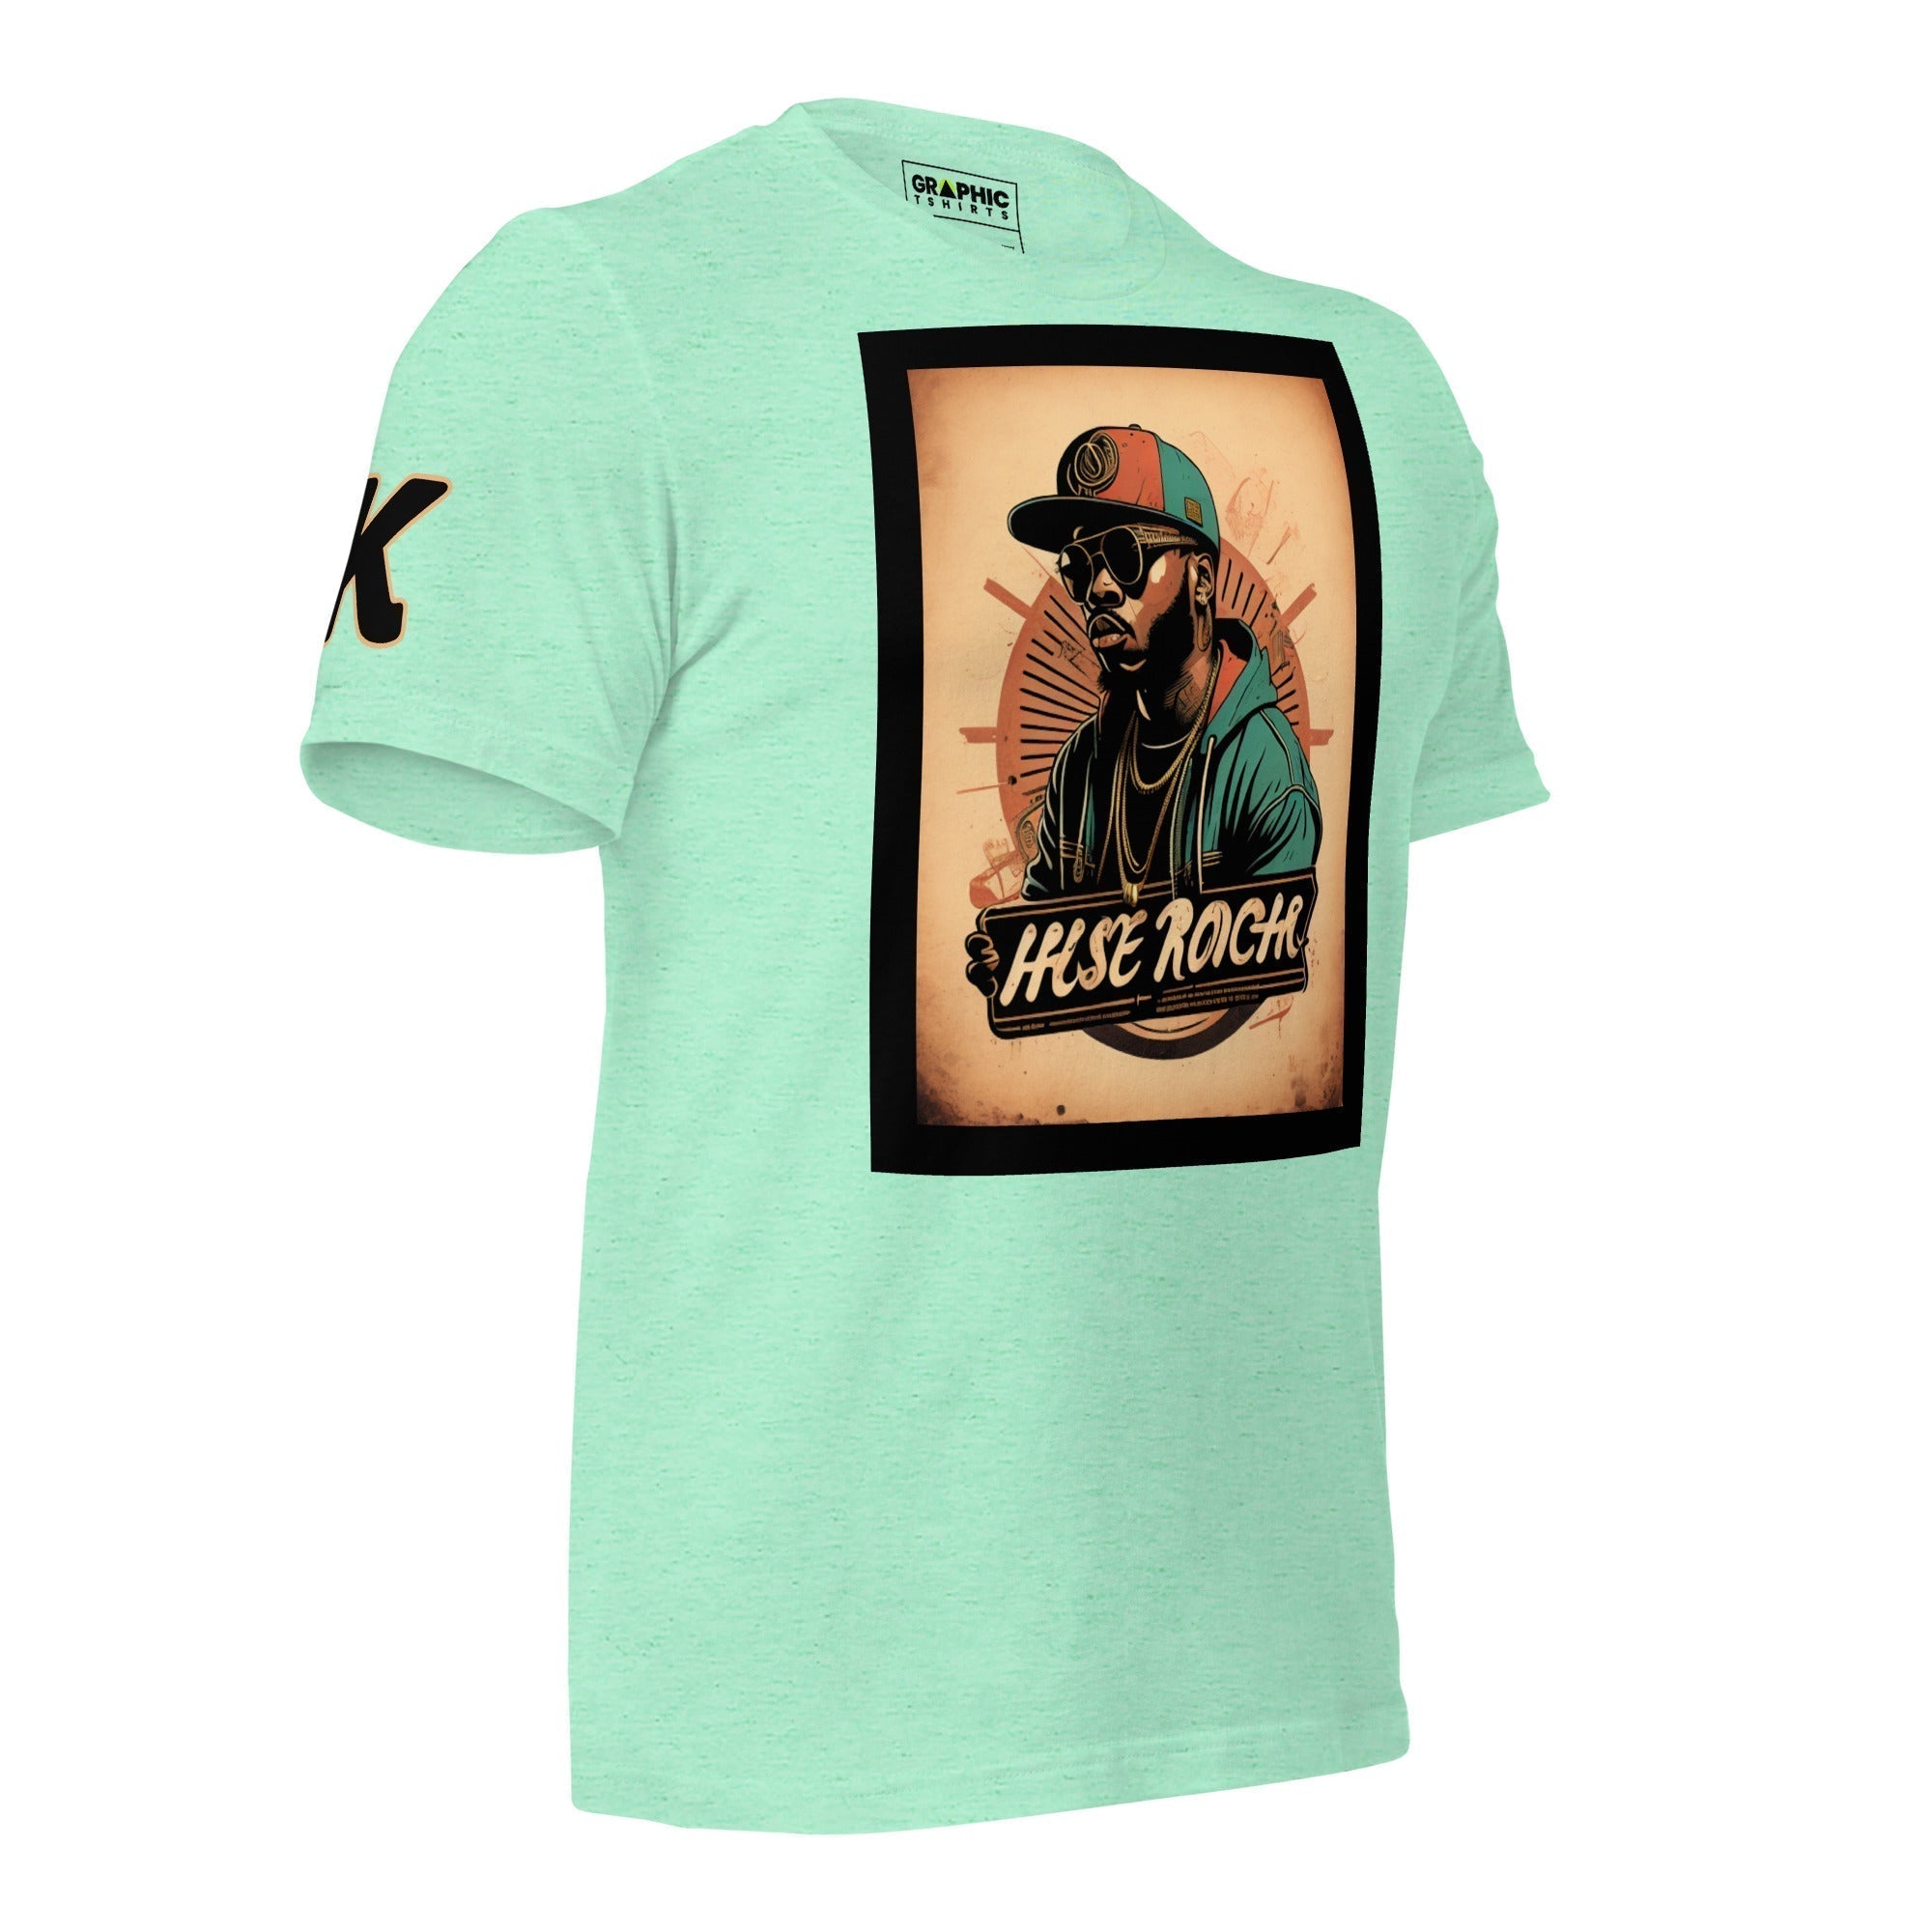 Unisex Crew Neck T-Shirt - Vintage Hip Hop Series v.22 - GRAPHIC T-SHIRTS